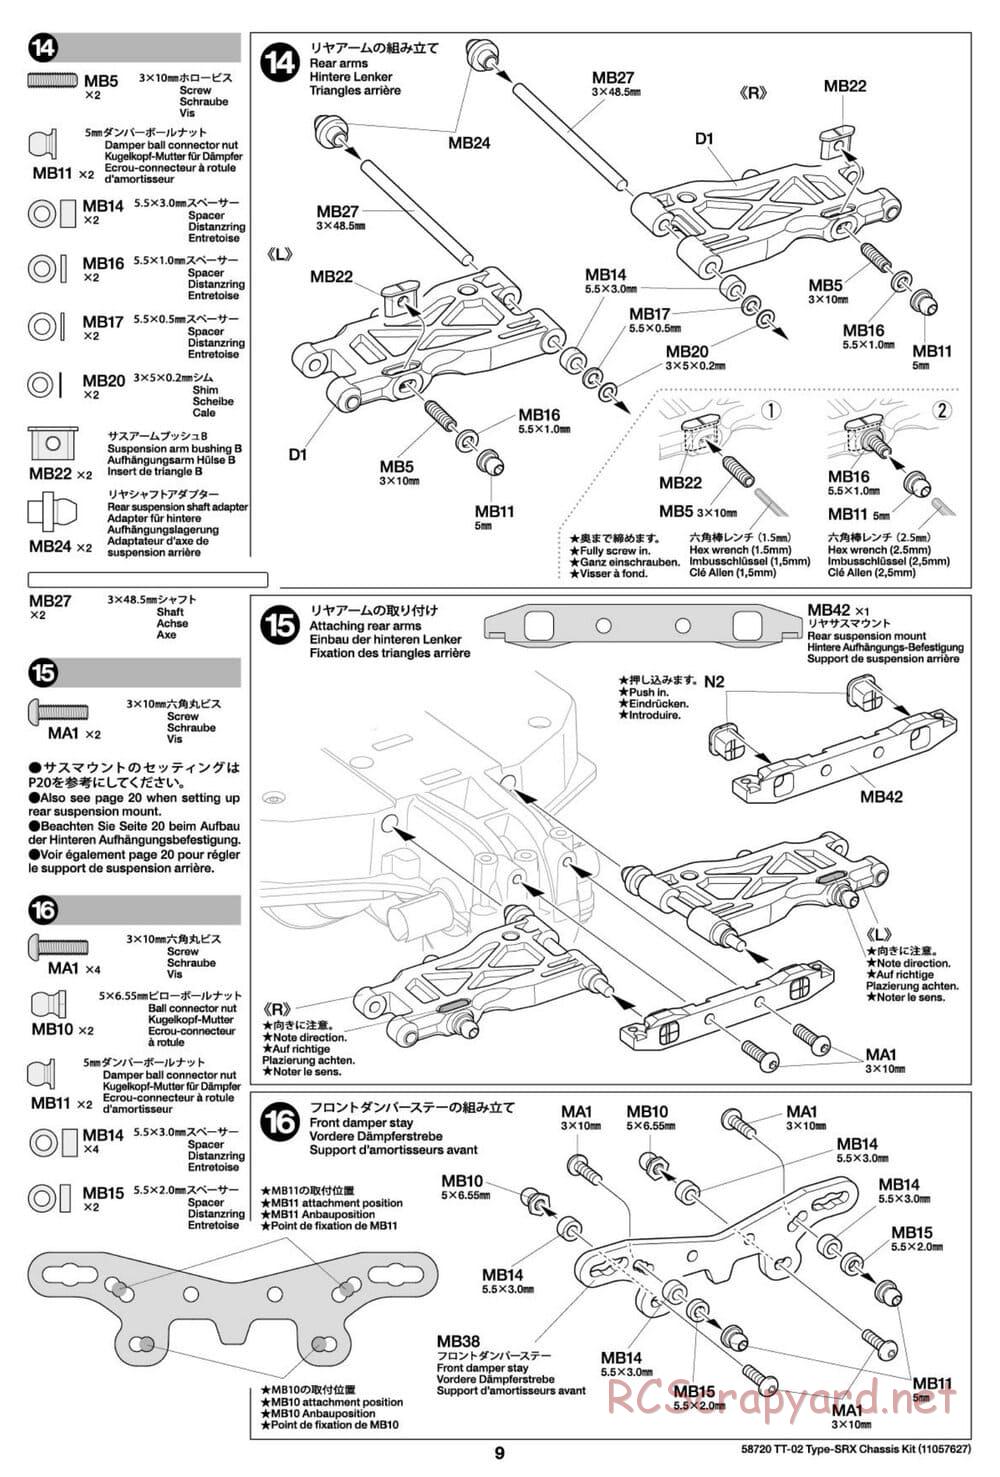 Tamiya - TT-02 Type-SRX Chassis - Manual - Page 9